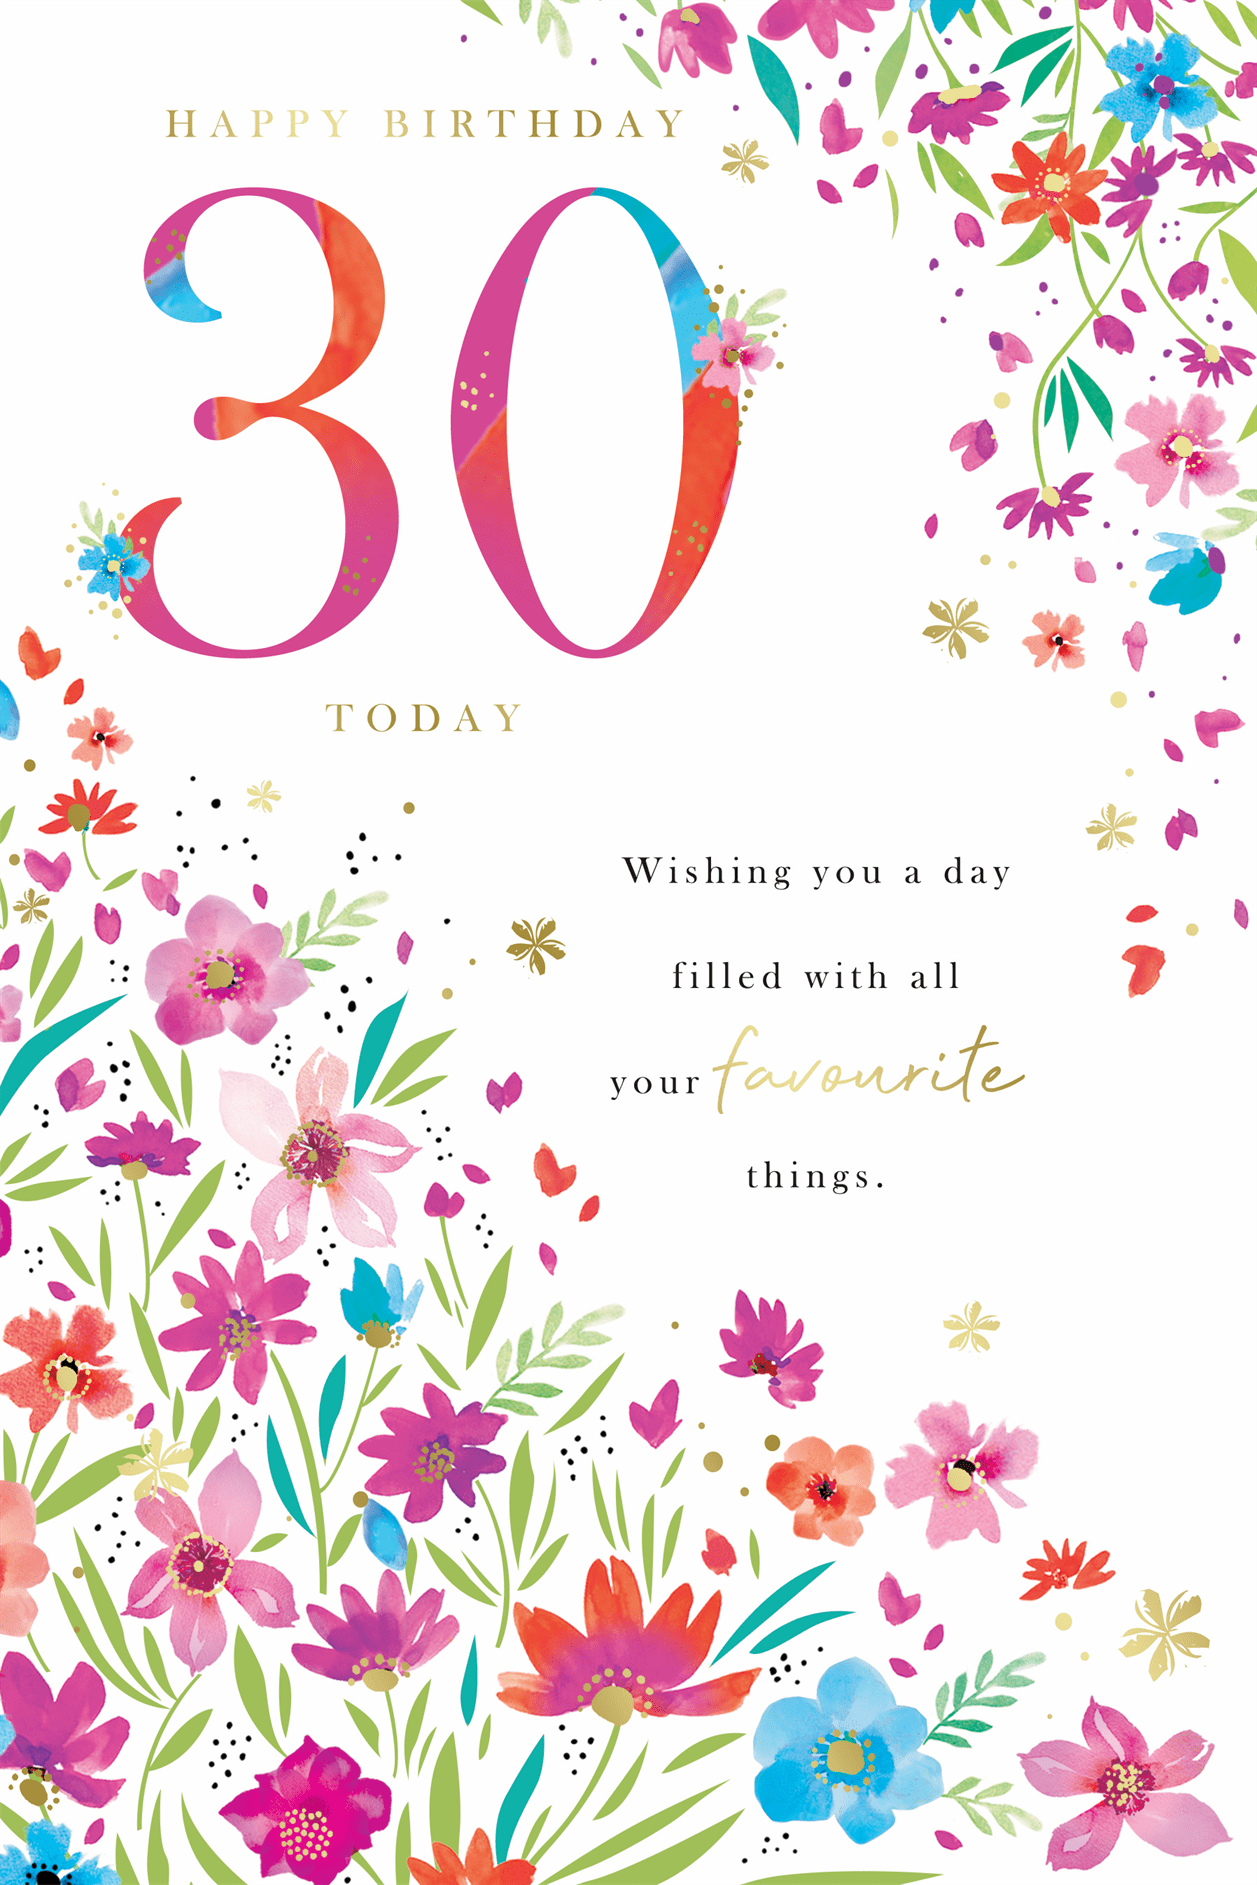 30th birthday card- flowers